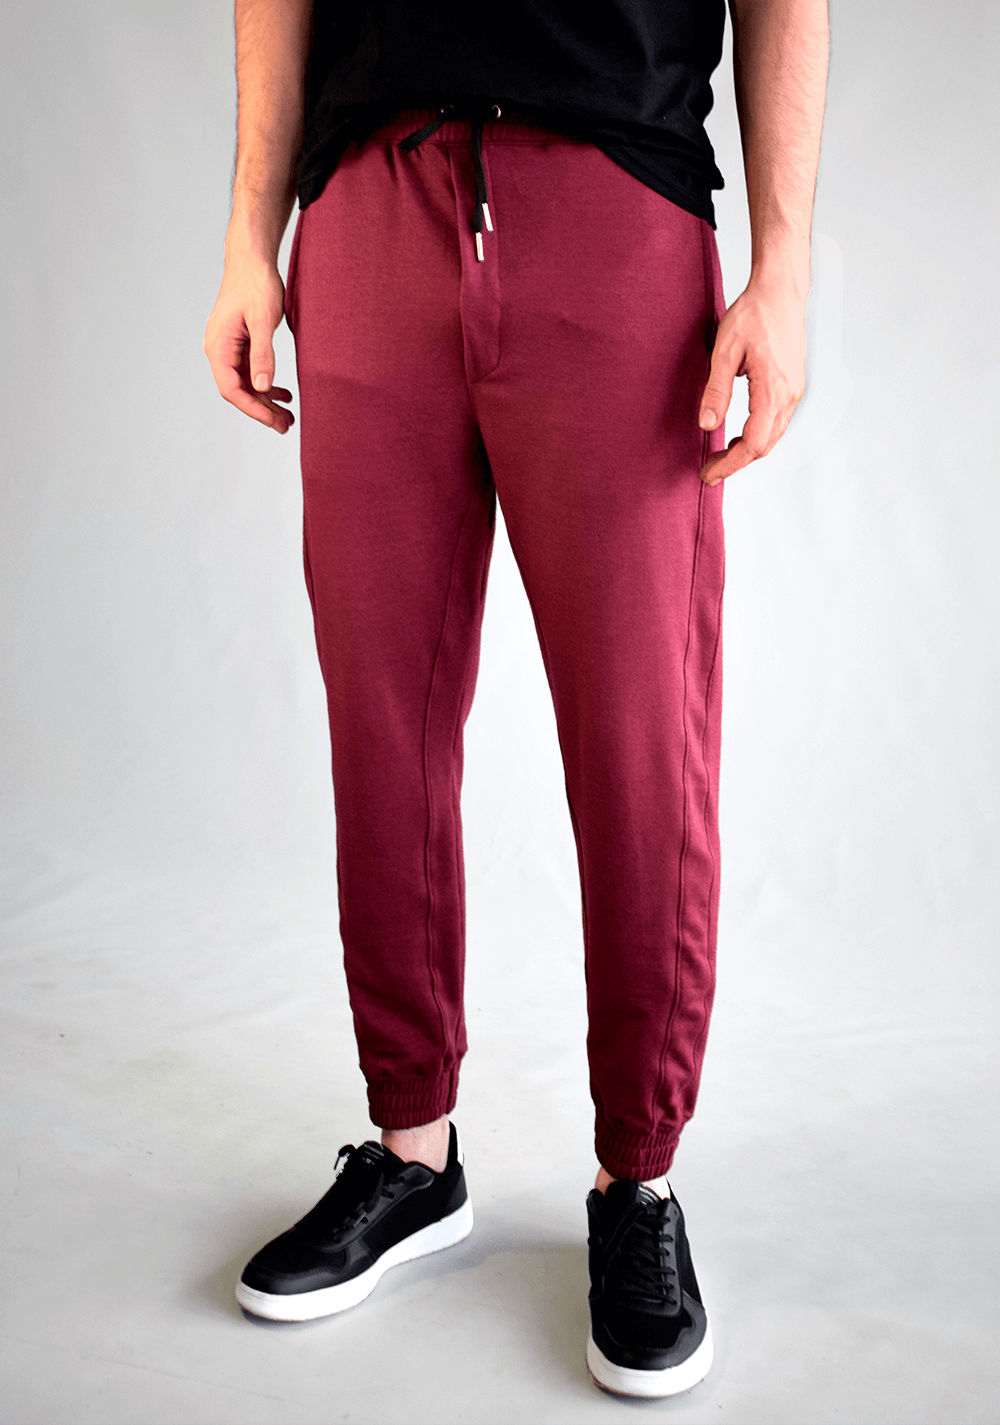 Pantalones ® Para Hombres de Vestir Elegante Moda Pantalón